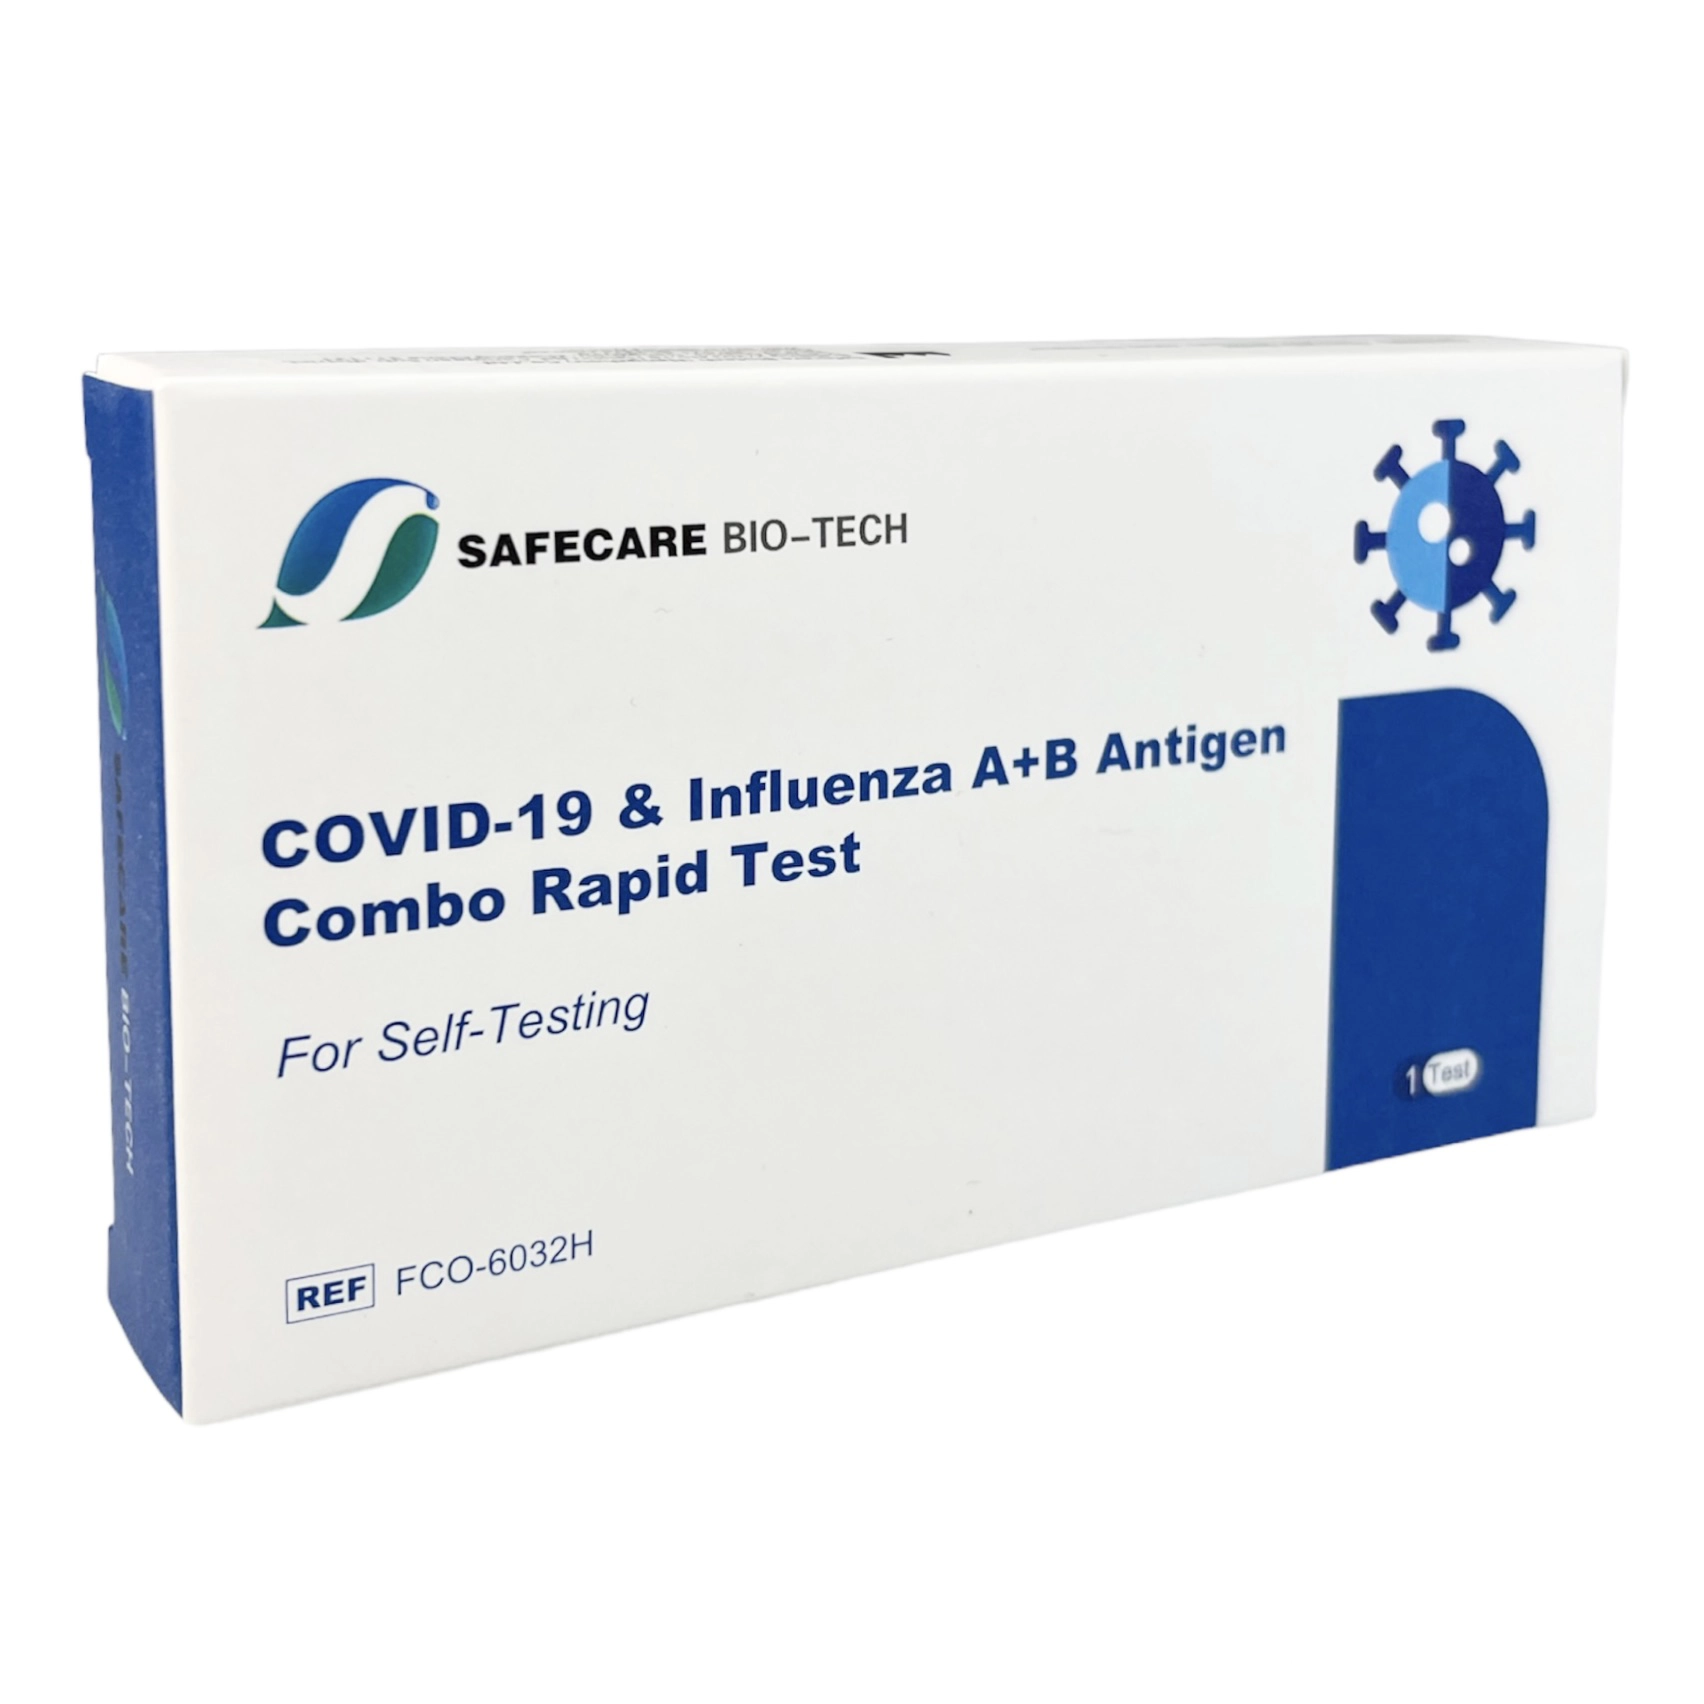 SAFECARE COVID-19 & Influenza A+B Antigen